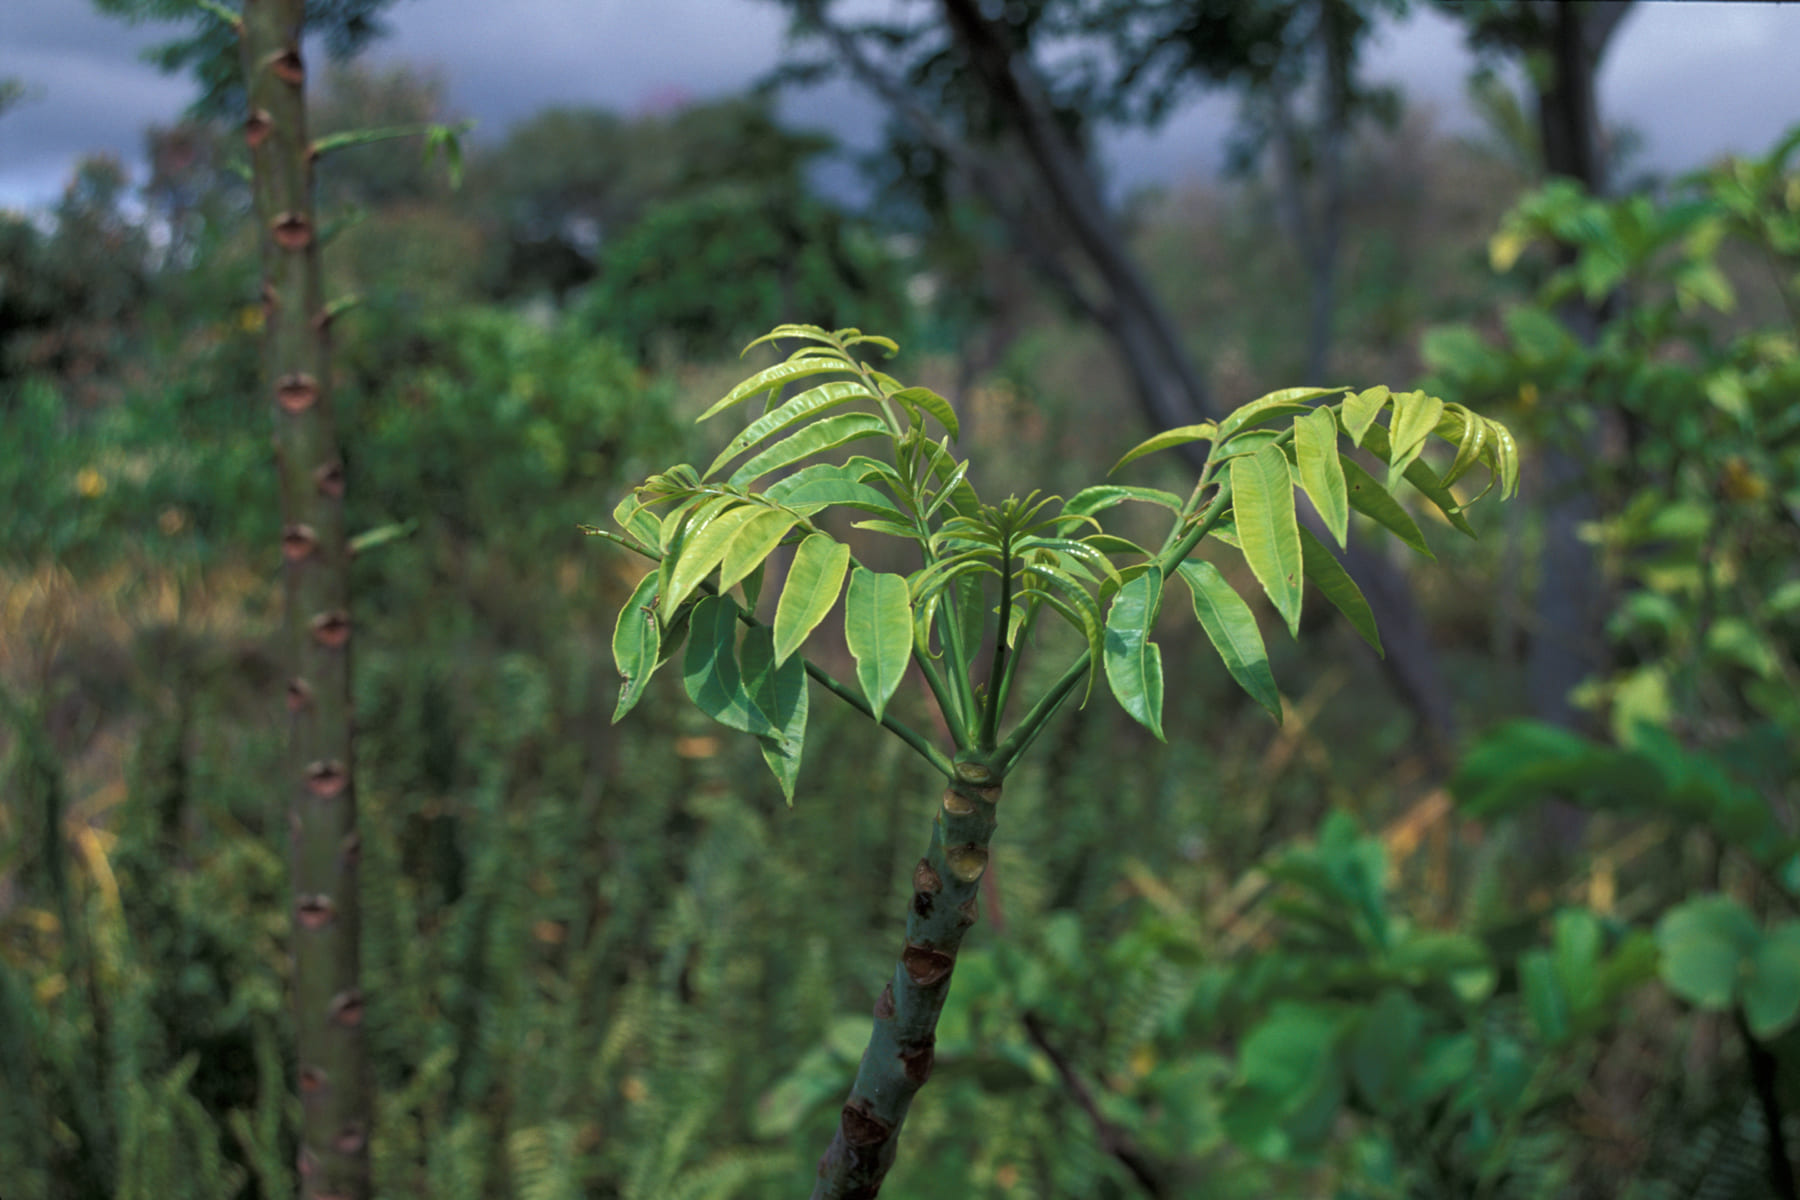 Morfologi tanaman Kedondong (Spondias dulcis) akar, batang, buah, daun, bunga dan fakta unik serta manfaatnya bagi kesehatan tubuh